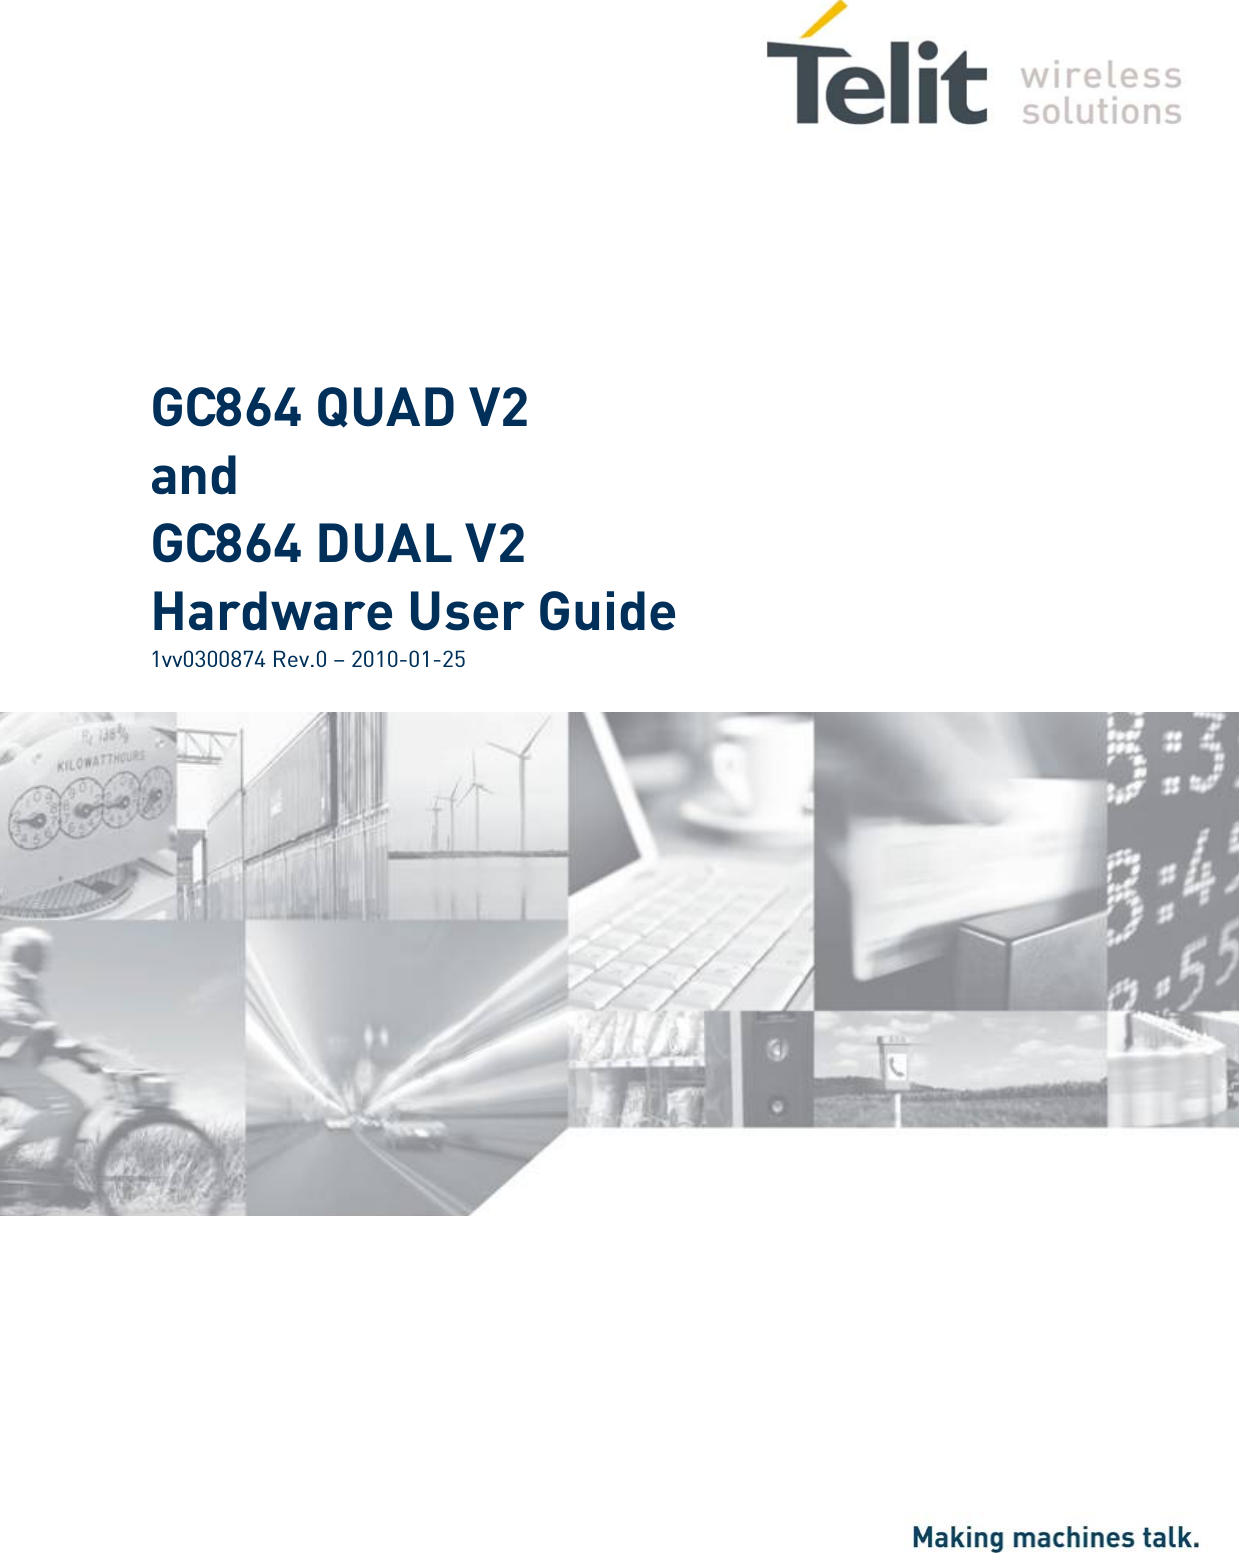                   GC864 QUAD V2  and  GC864 DUAL V2  Hardware User Guide 1vv0300874 Rev.0 – 2010-01-25 